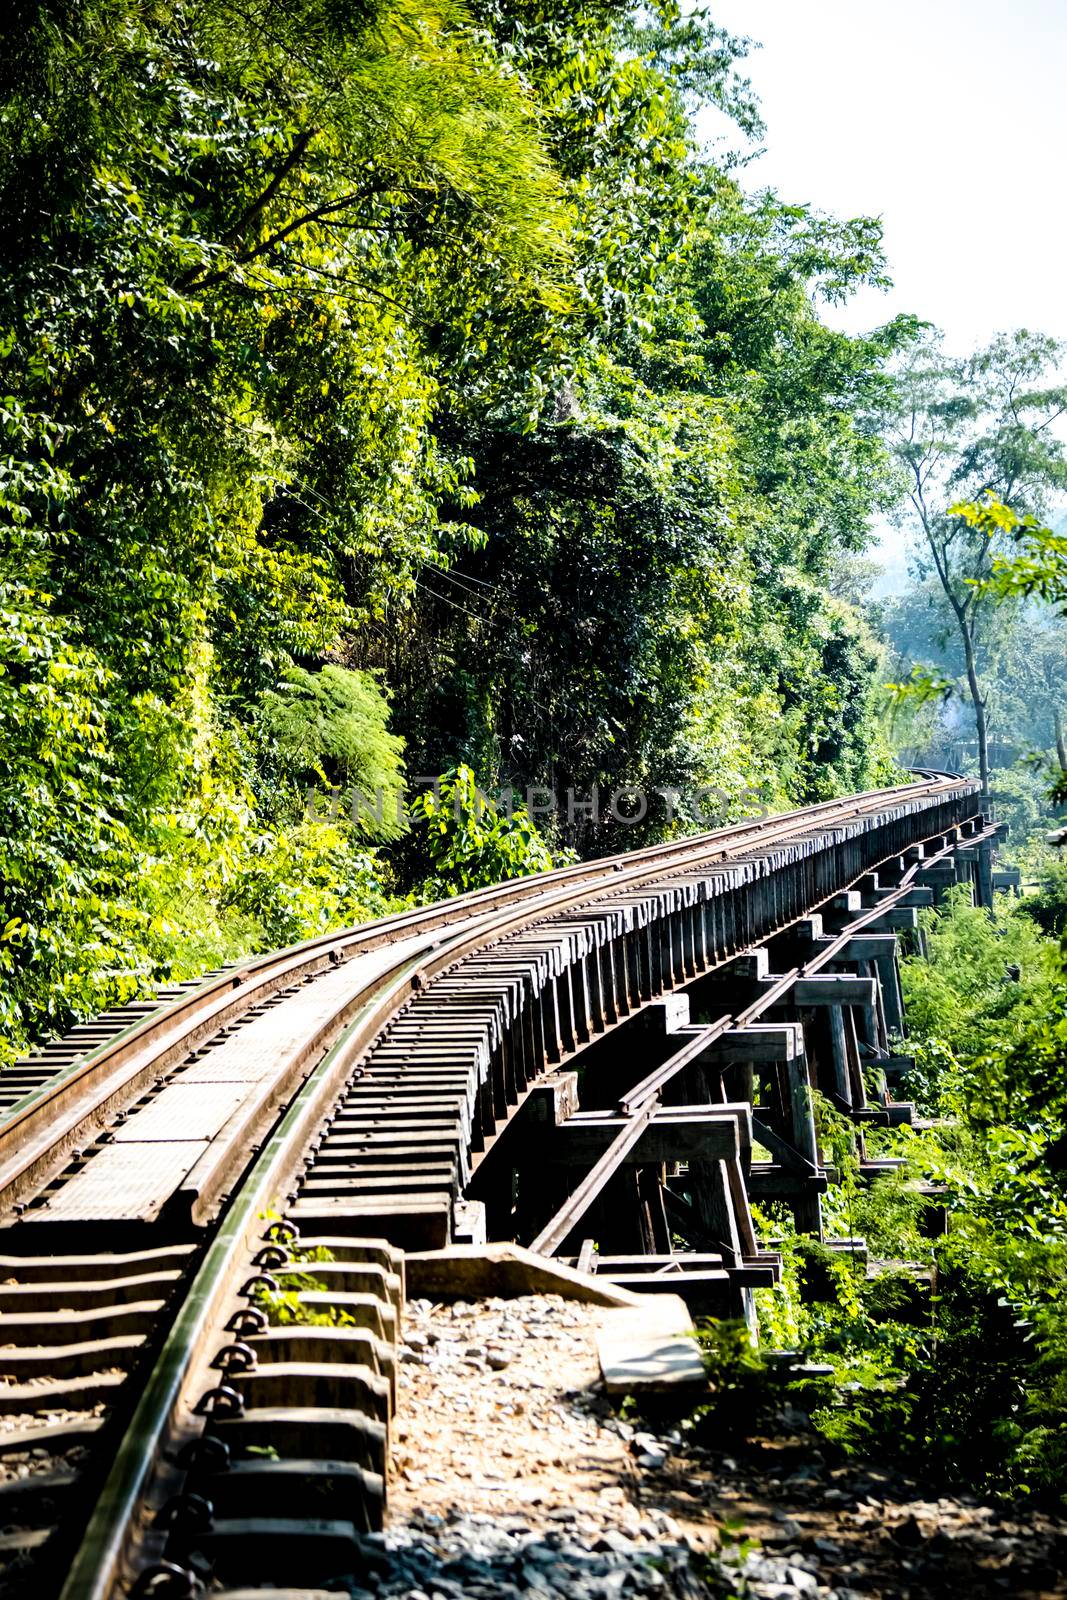 Thai-Burma Railway Death Railway.Line Railway World War 2 in Kanchanaburi Thailand